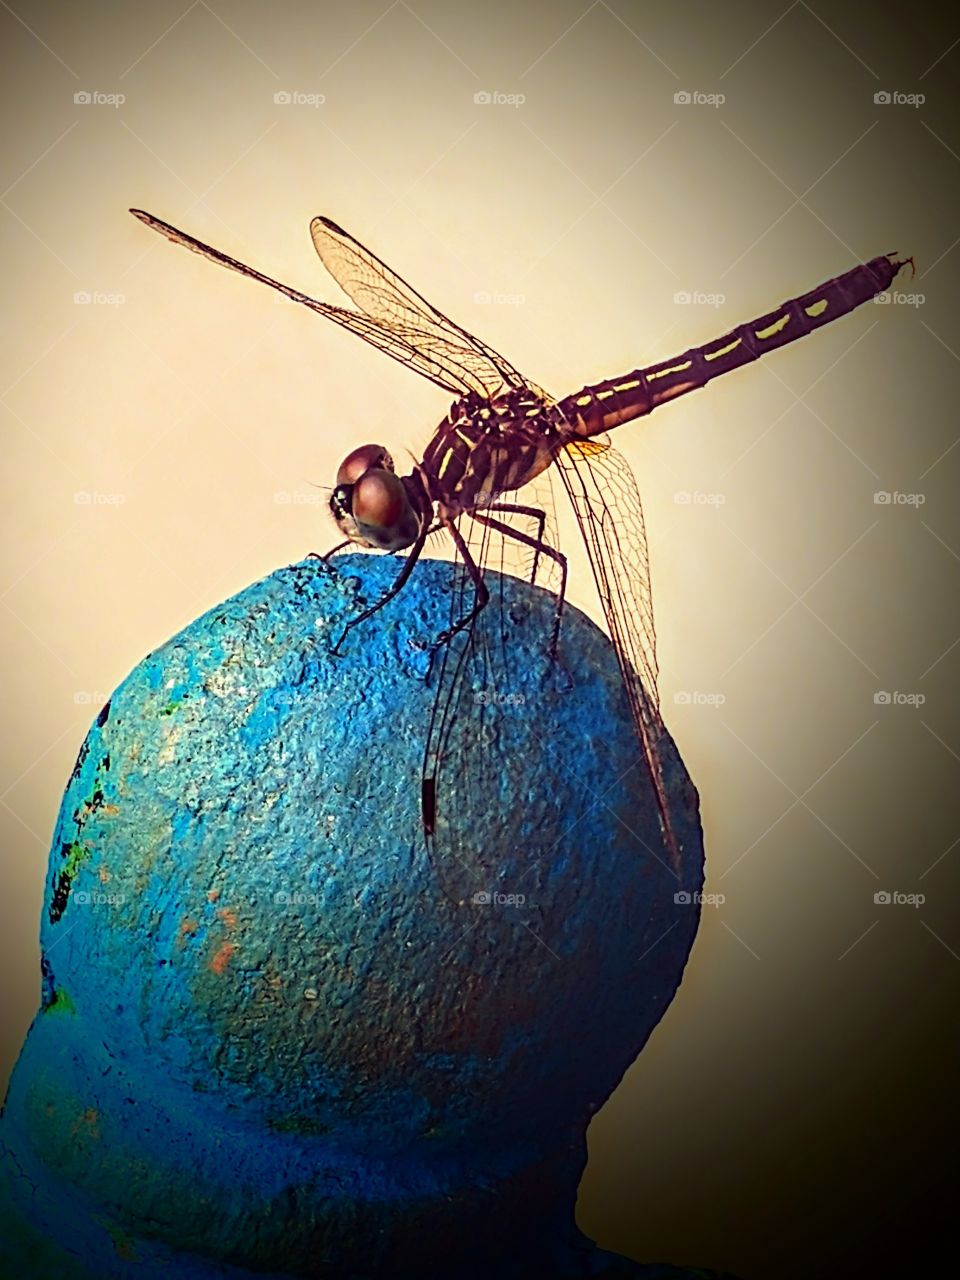 resting dragonfly